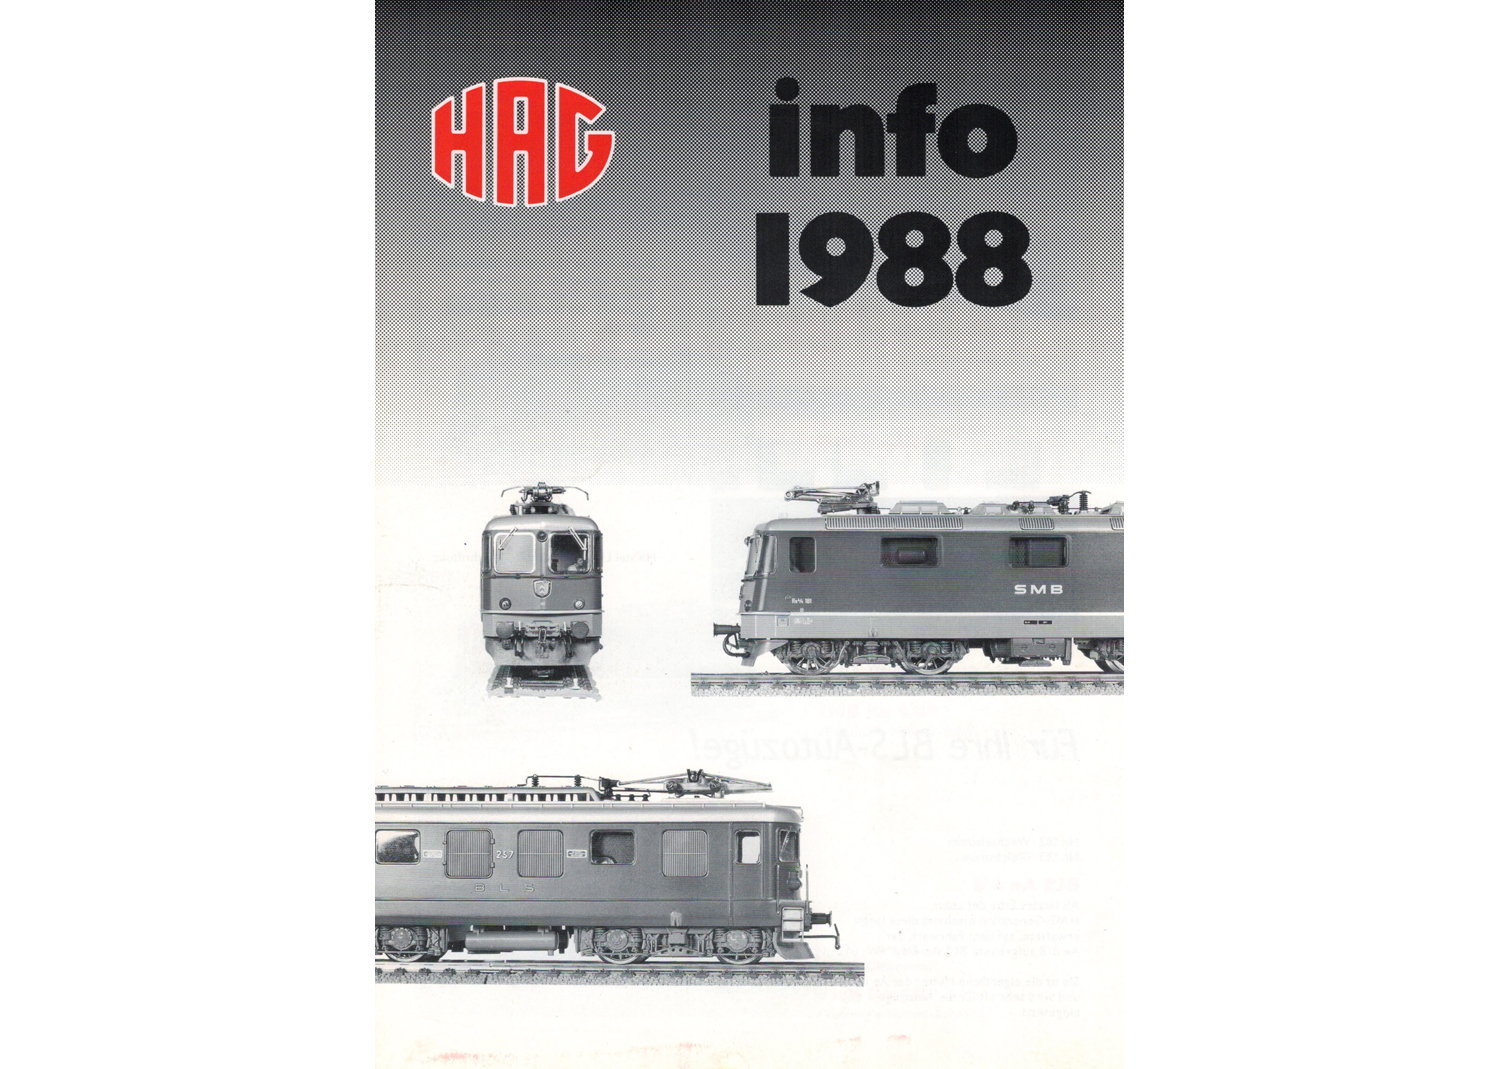 Hag info 1988